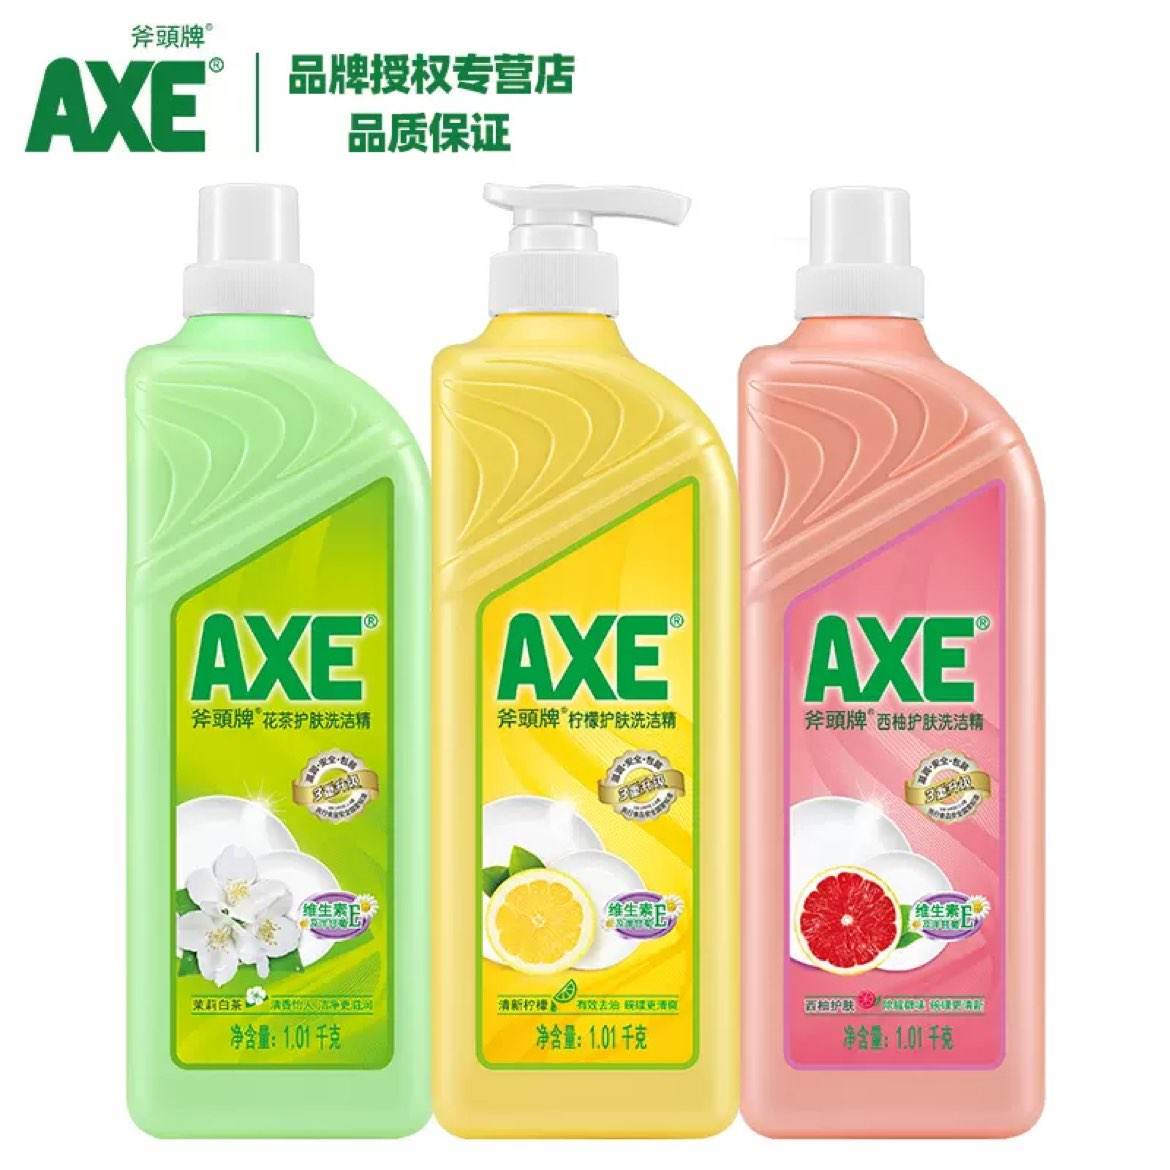 AXE 斧头 柠檬洗洁精 3瓶 28.9元